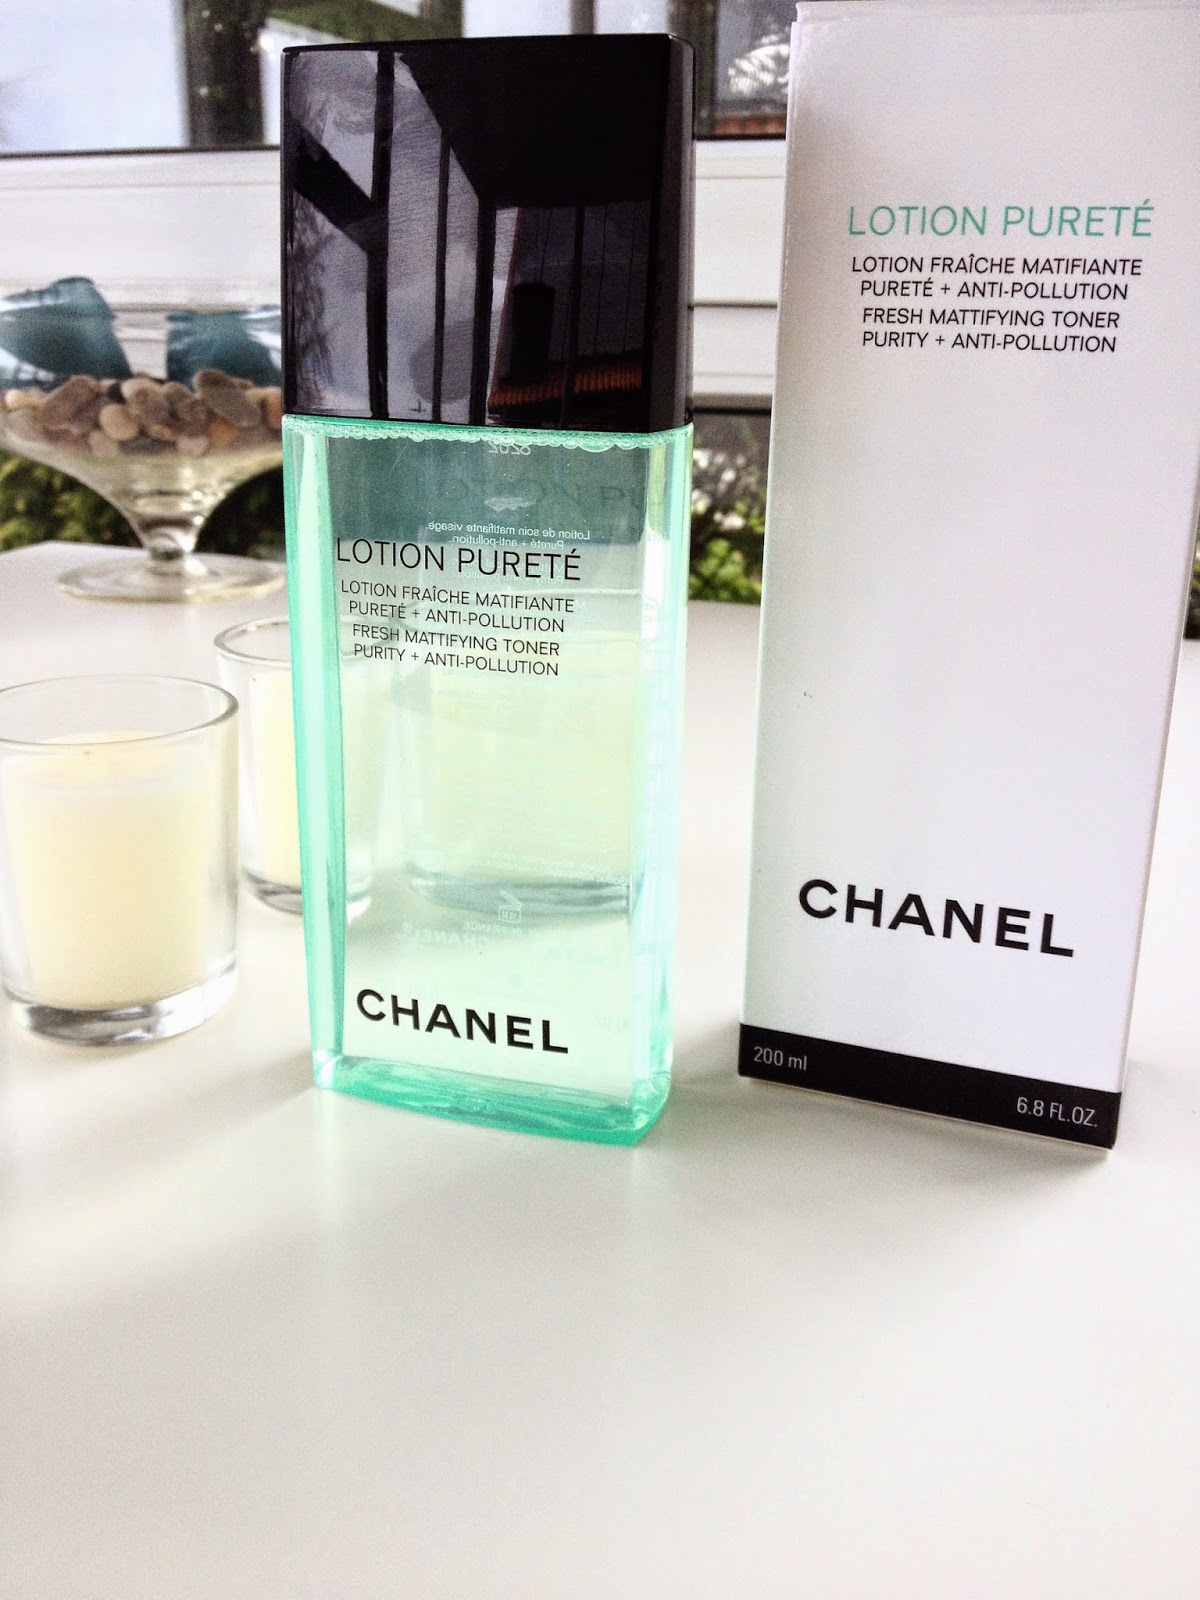 Christine's Beauty and Makeup: Chanel Lotion Pureté Fresh Mattifying Toner  - Review